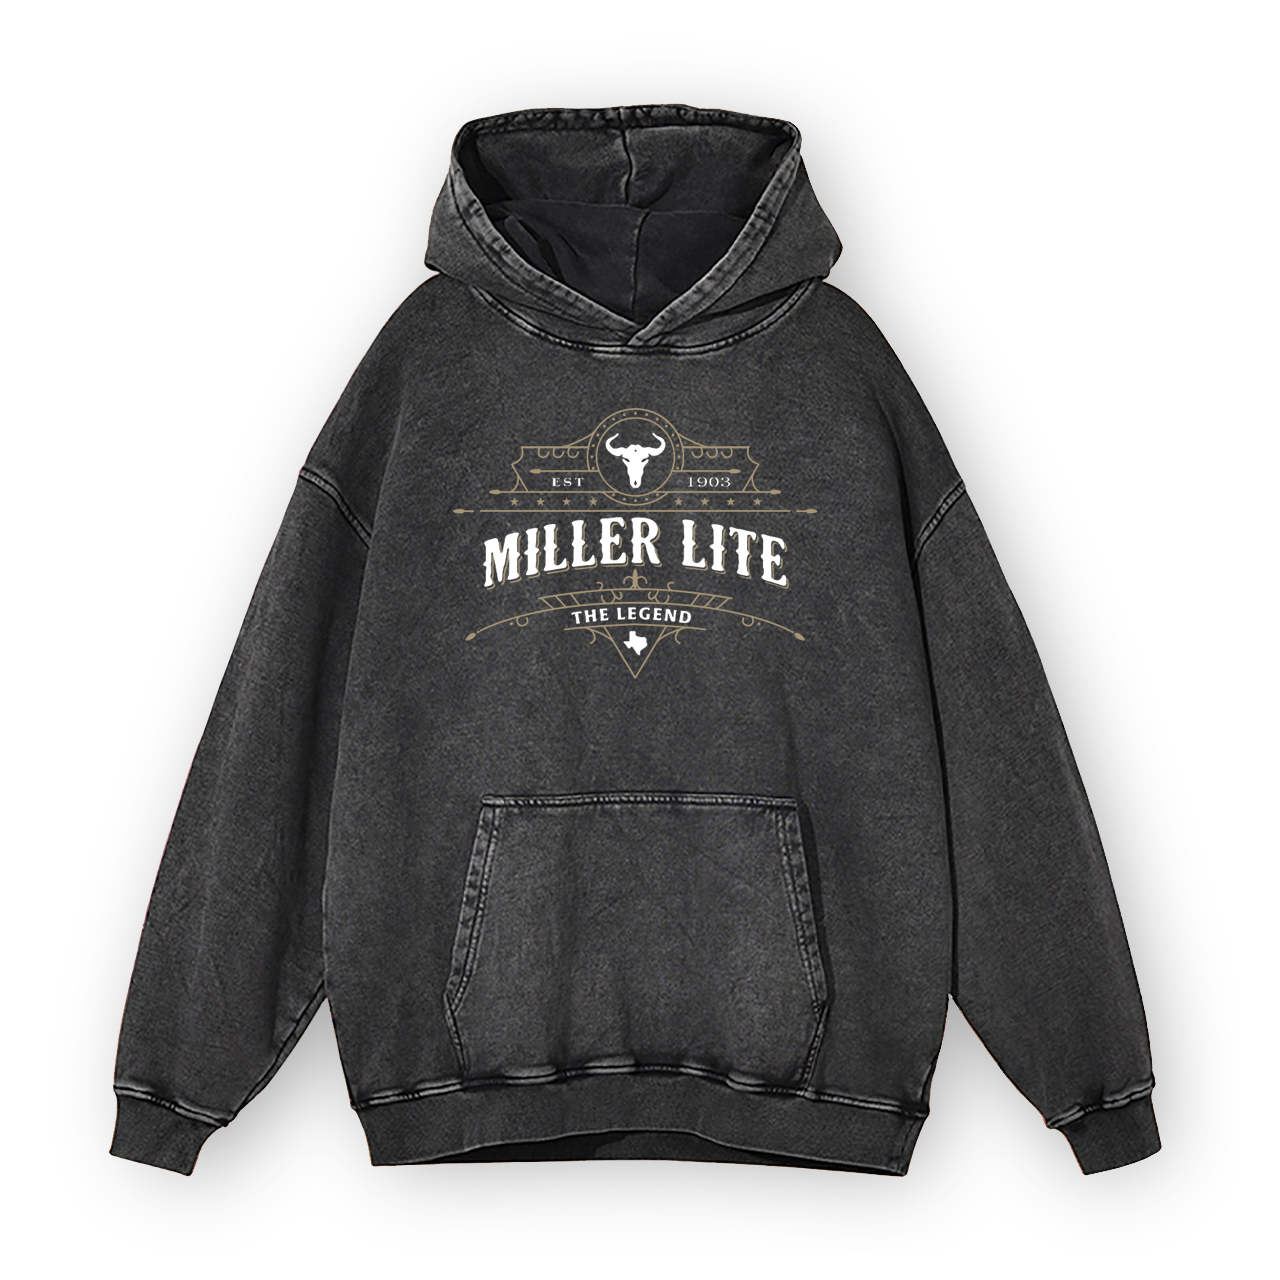 The Legend Miller Lite Garment-Dye Hoodies